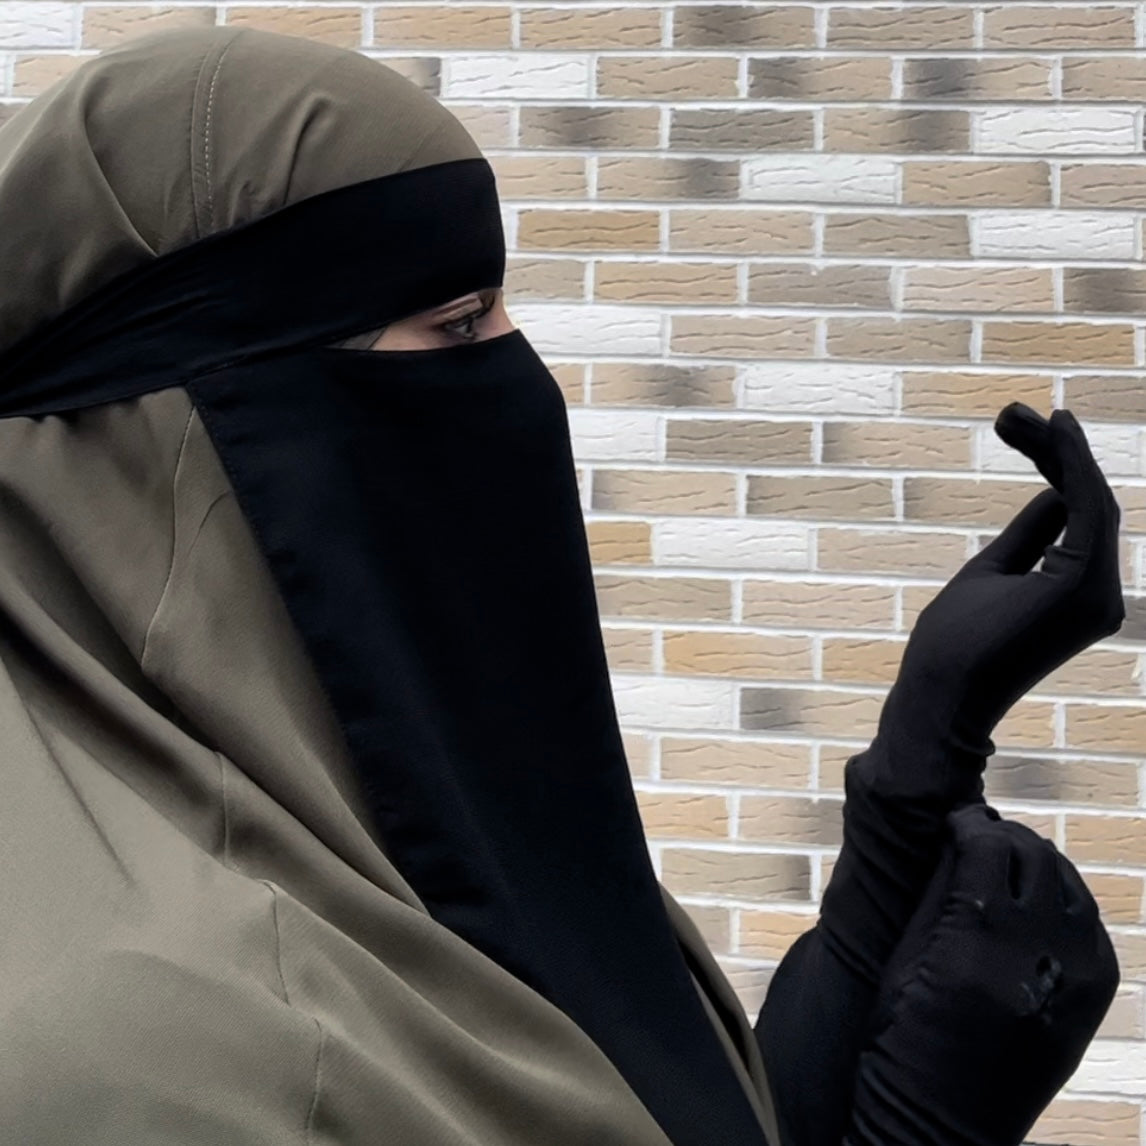 One Layer Niqab